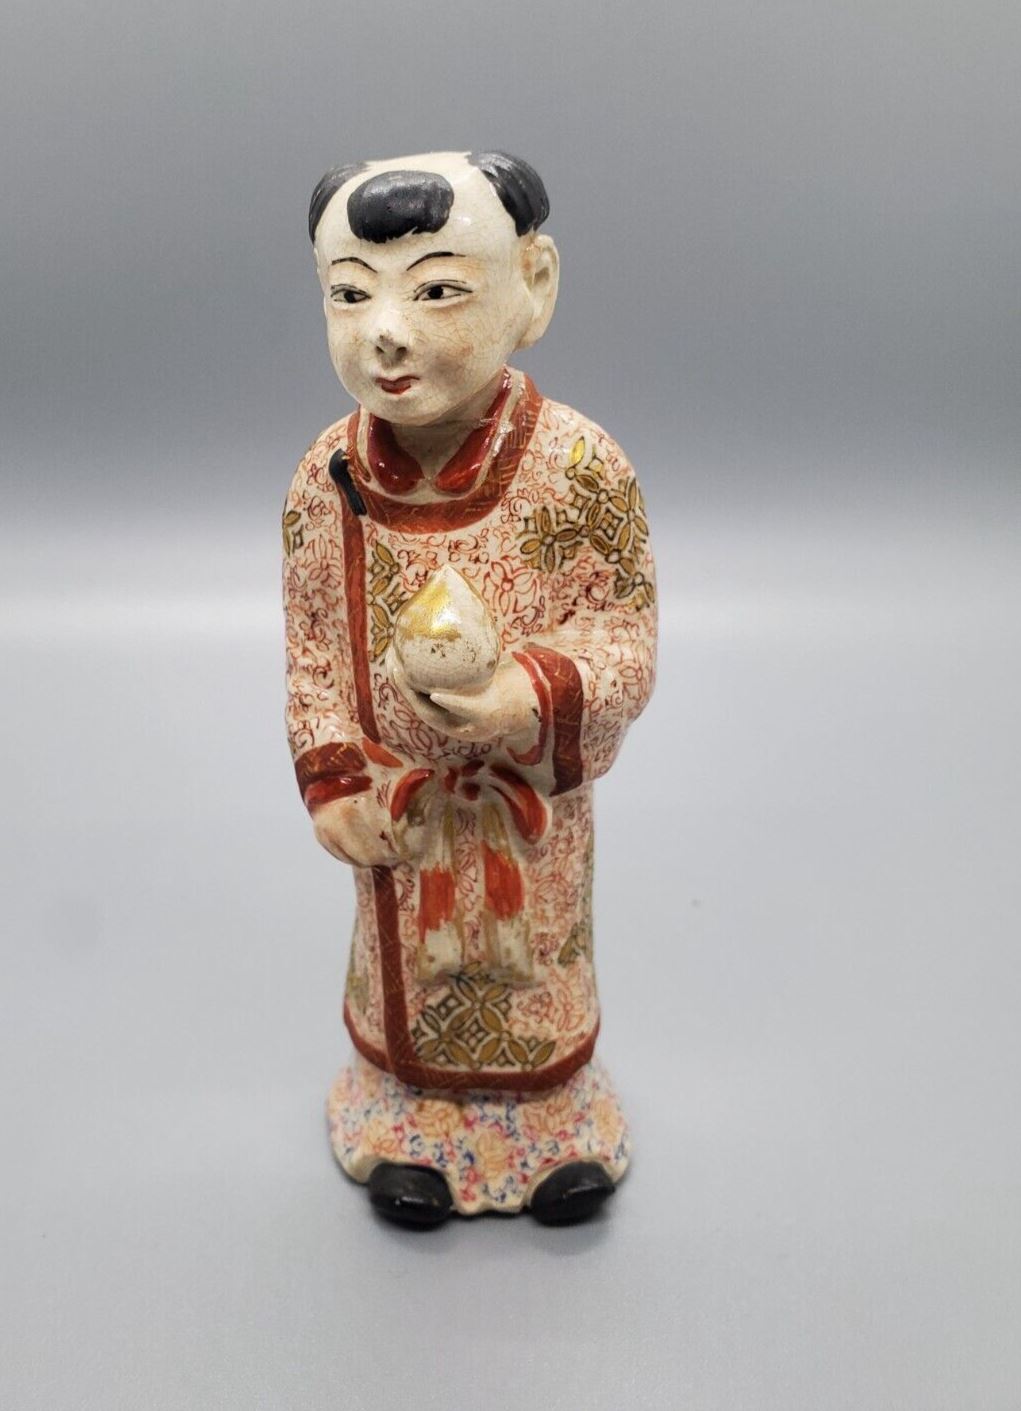 Vintage Asian Man Ceramic Figurine - Hand Painted